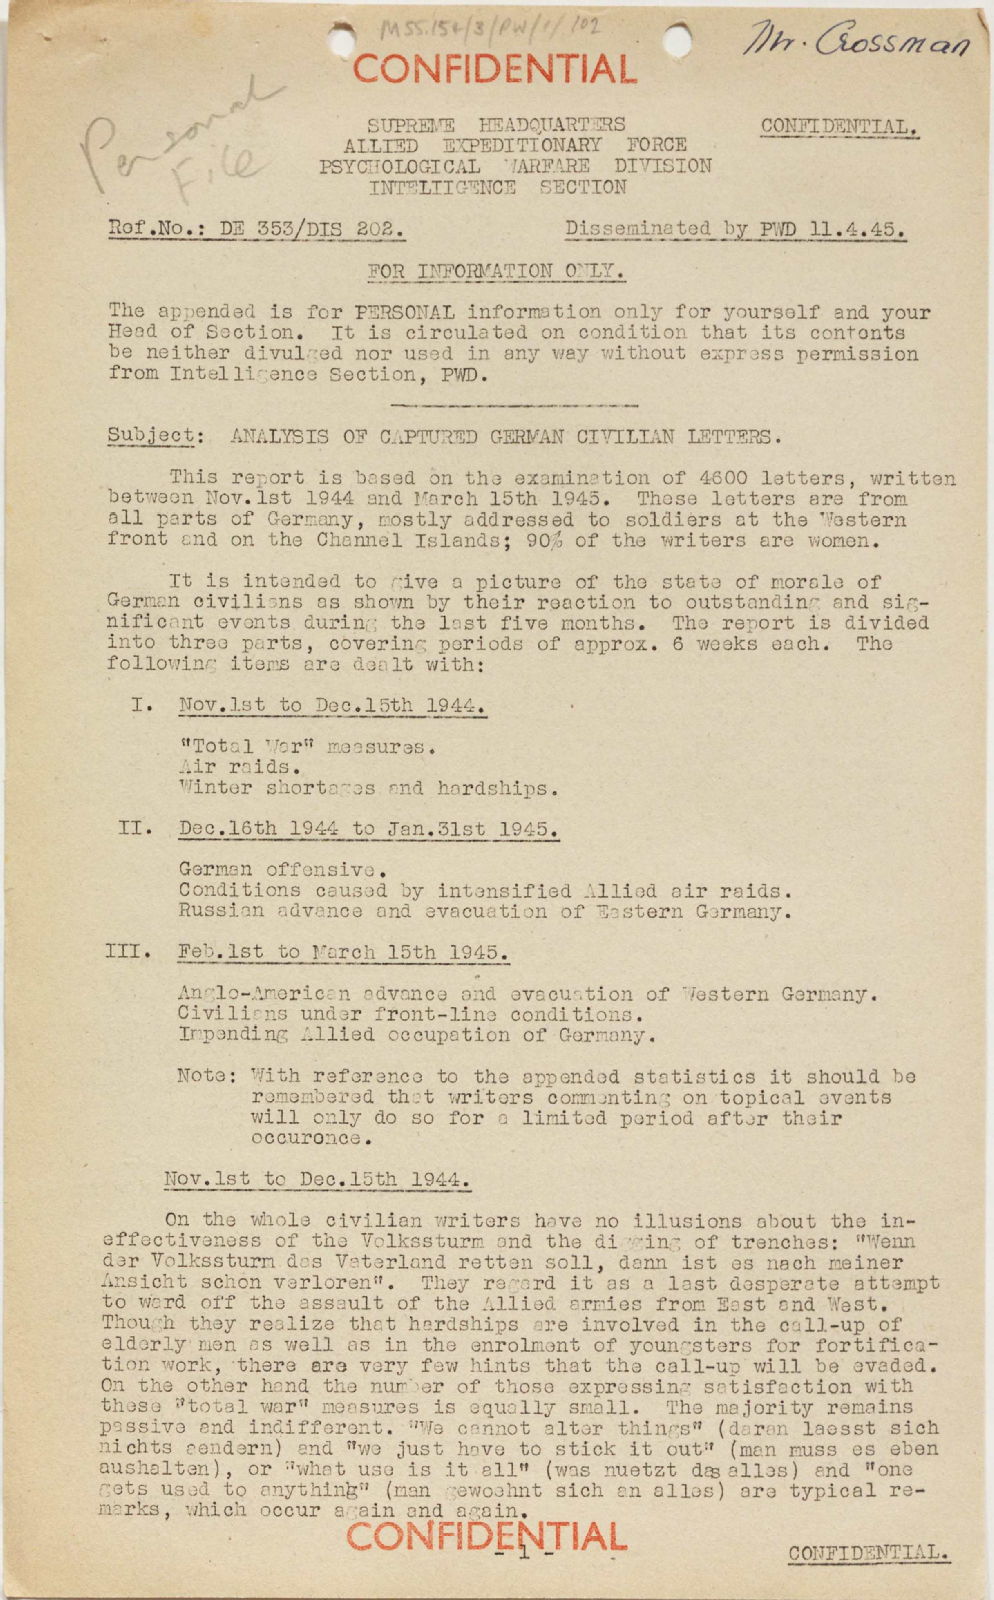 Analysis of captured German civilian letters